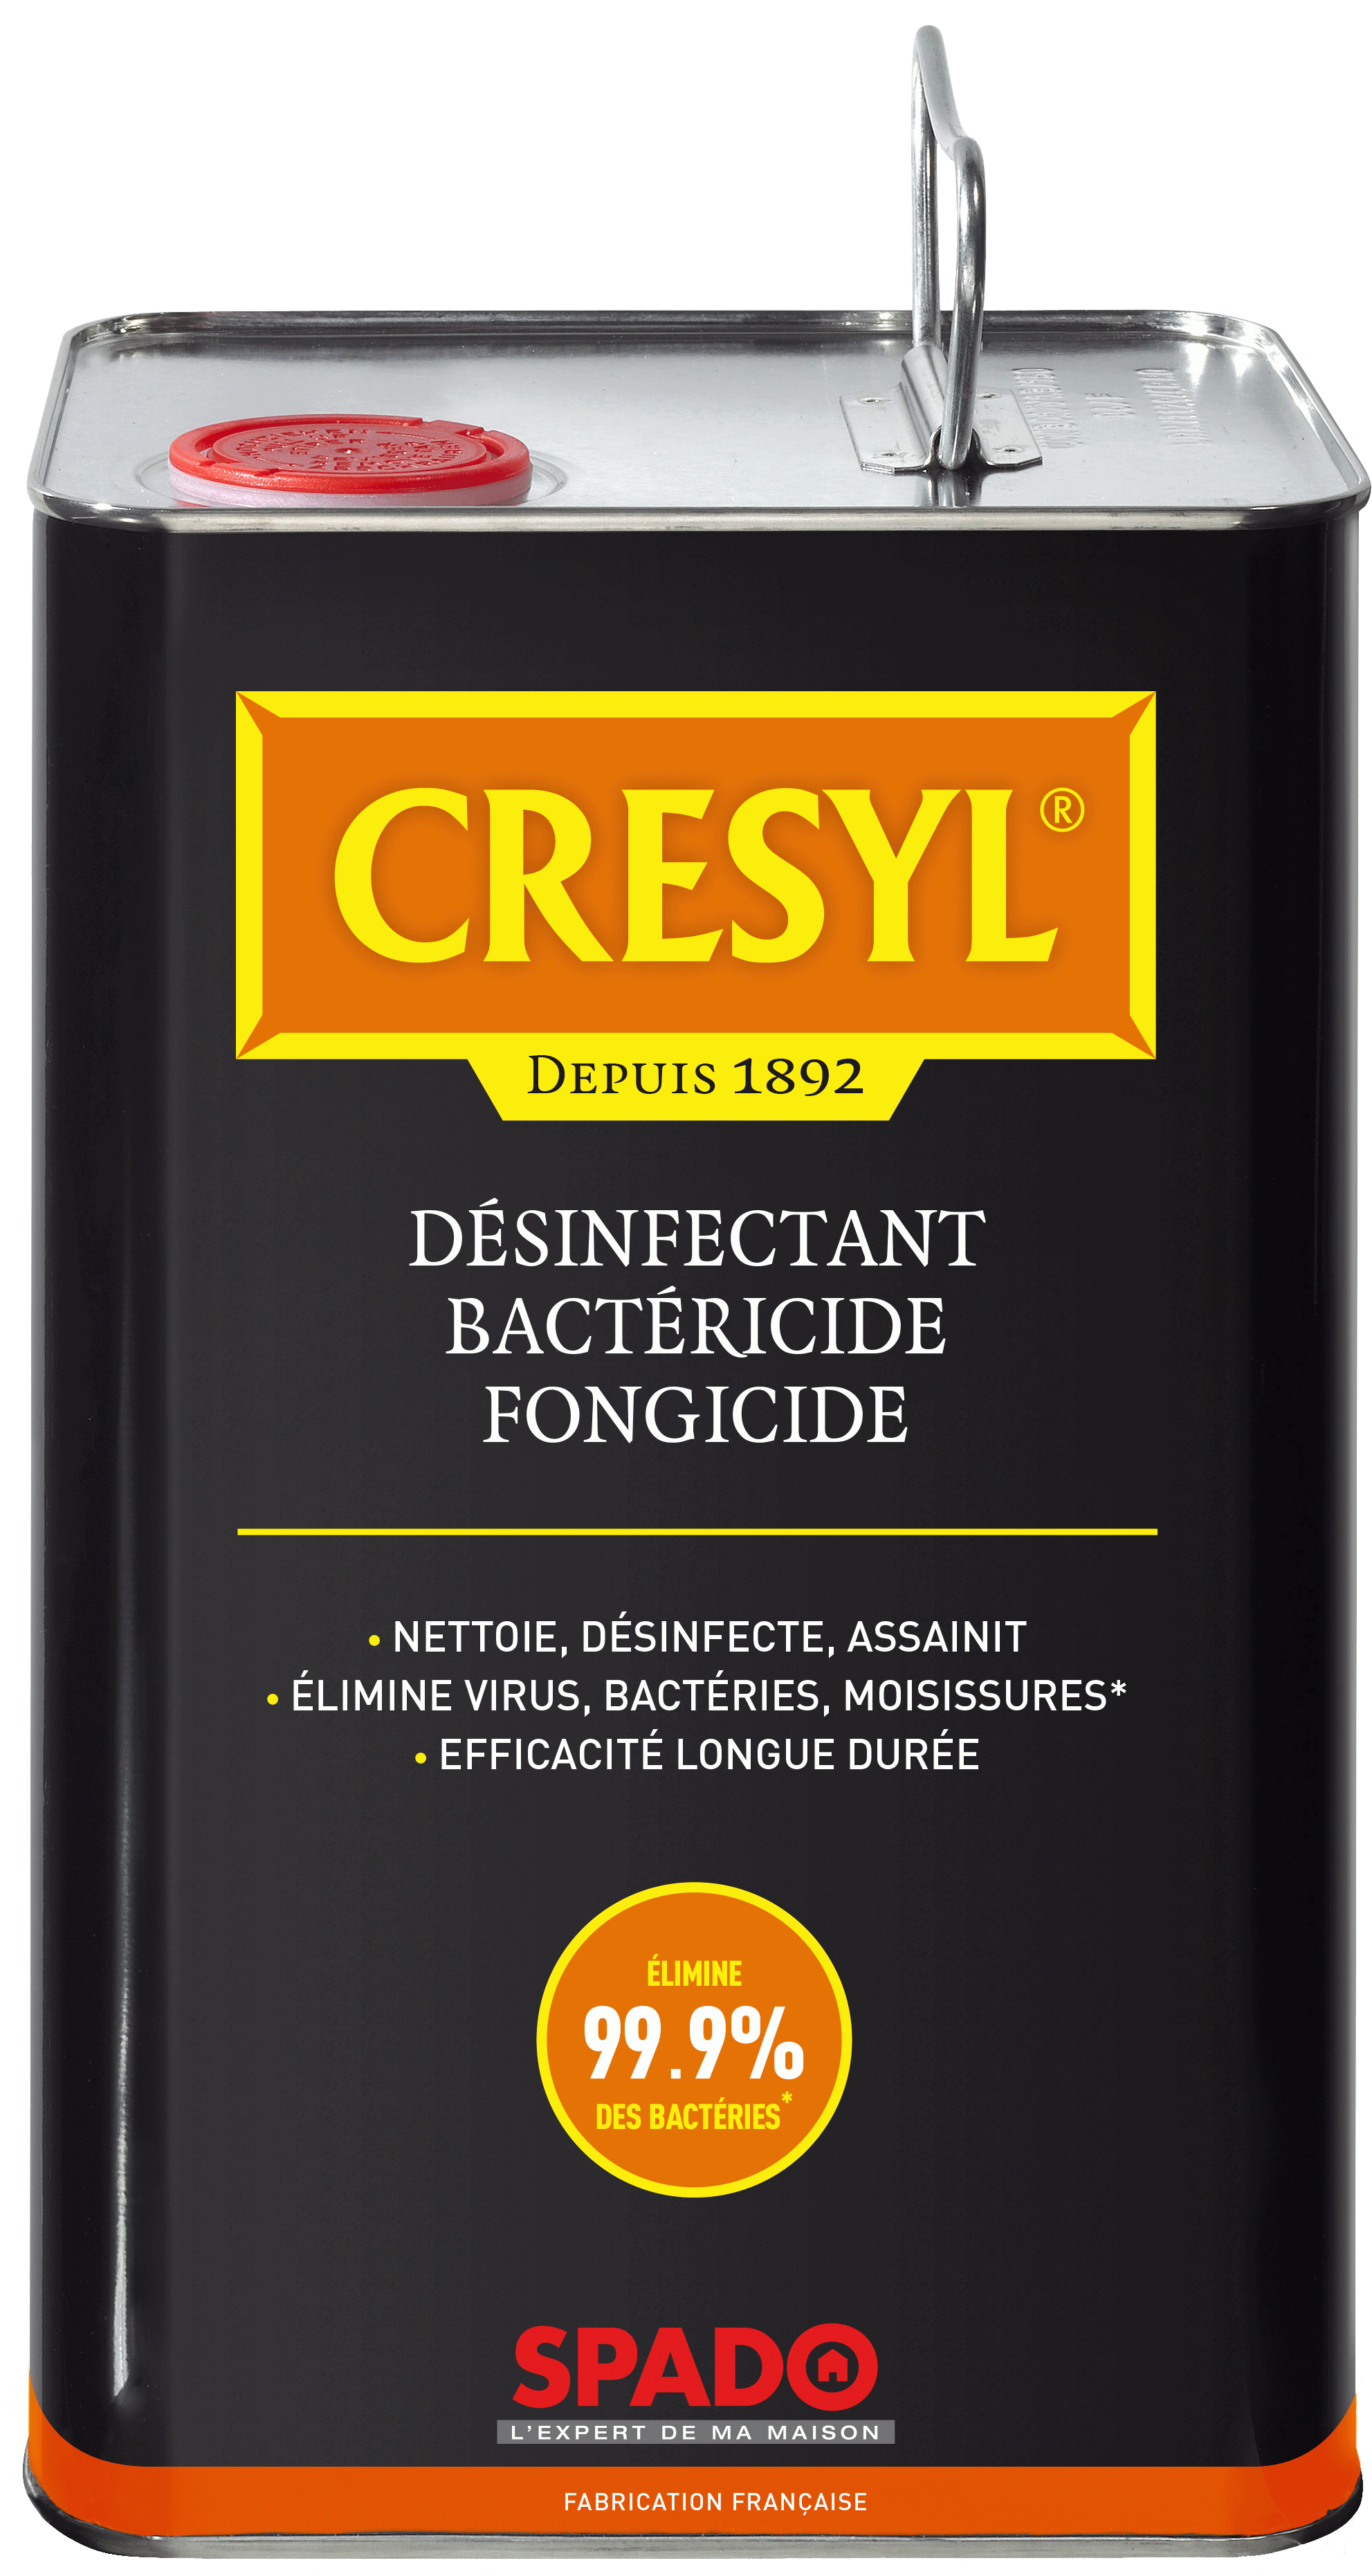 Cresyl bactericidal disinfectant - Ukal